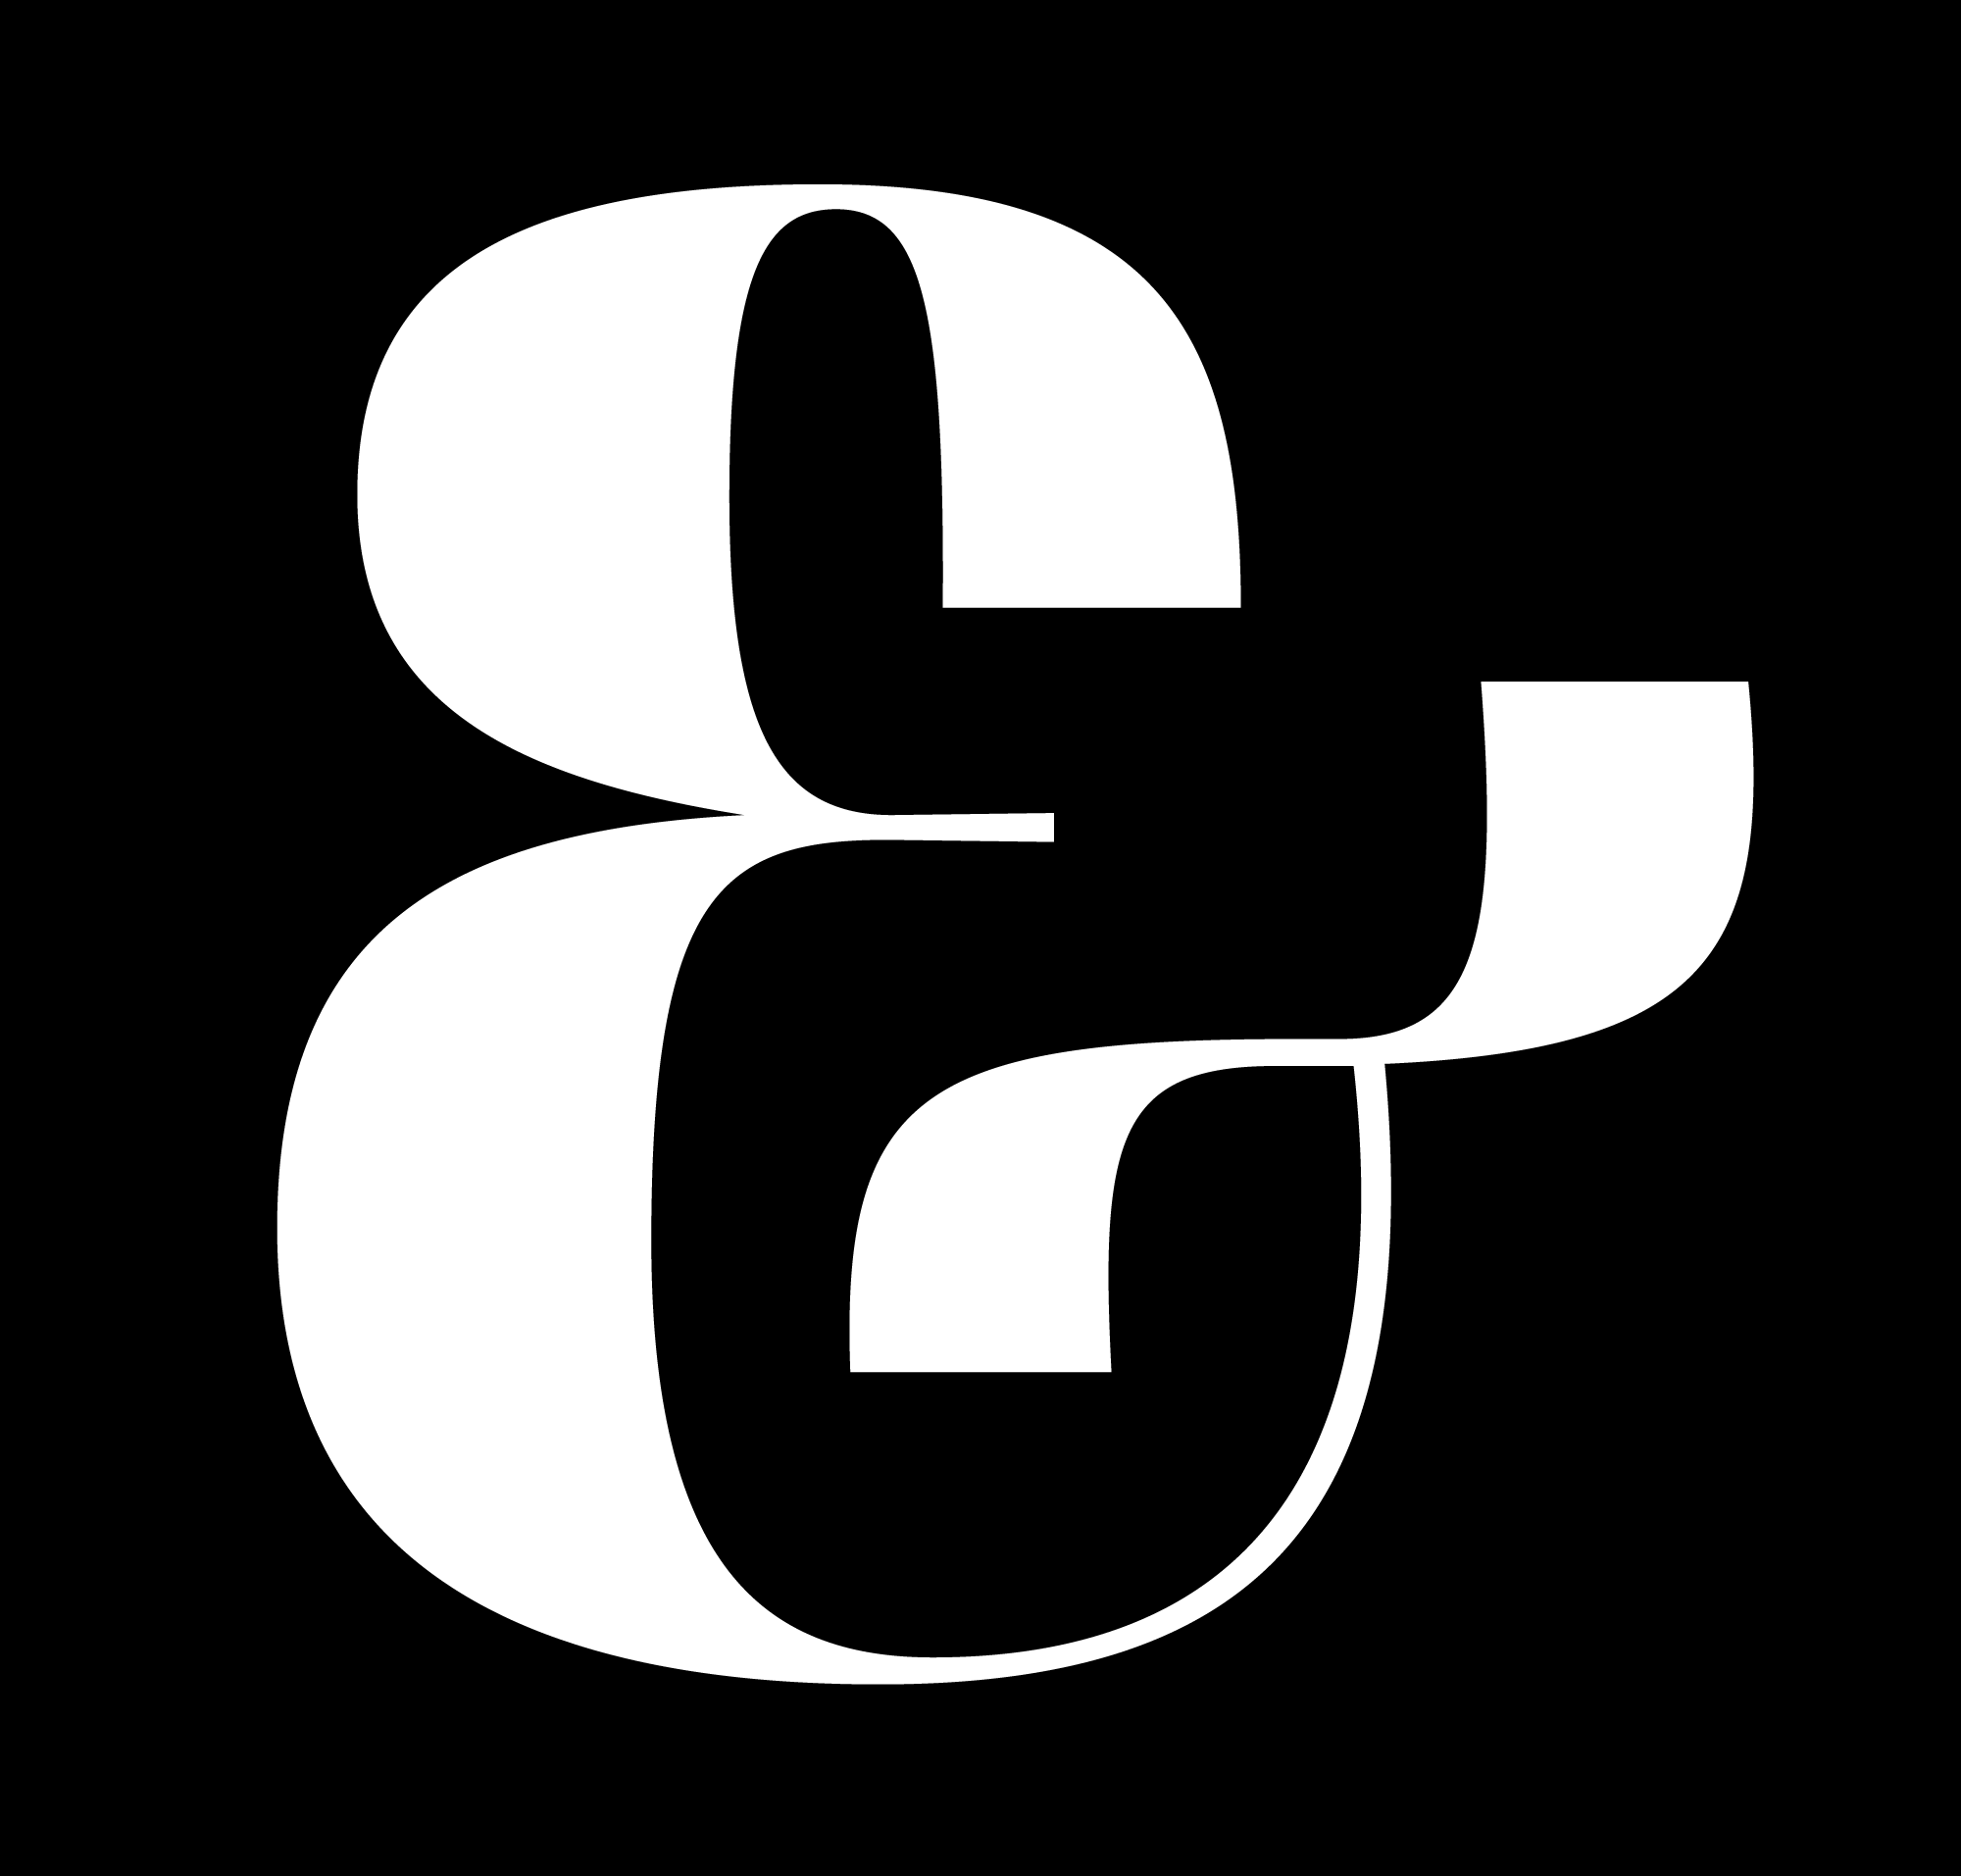 Alternate ampersand